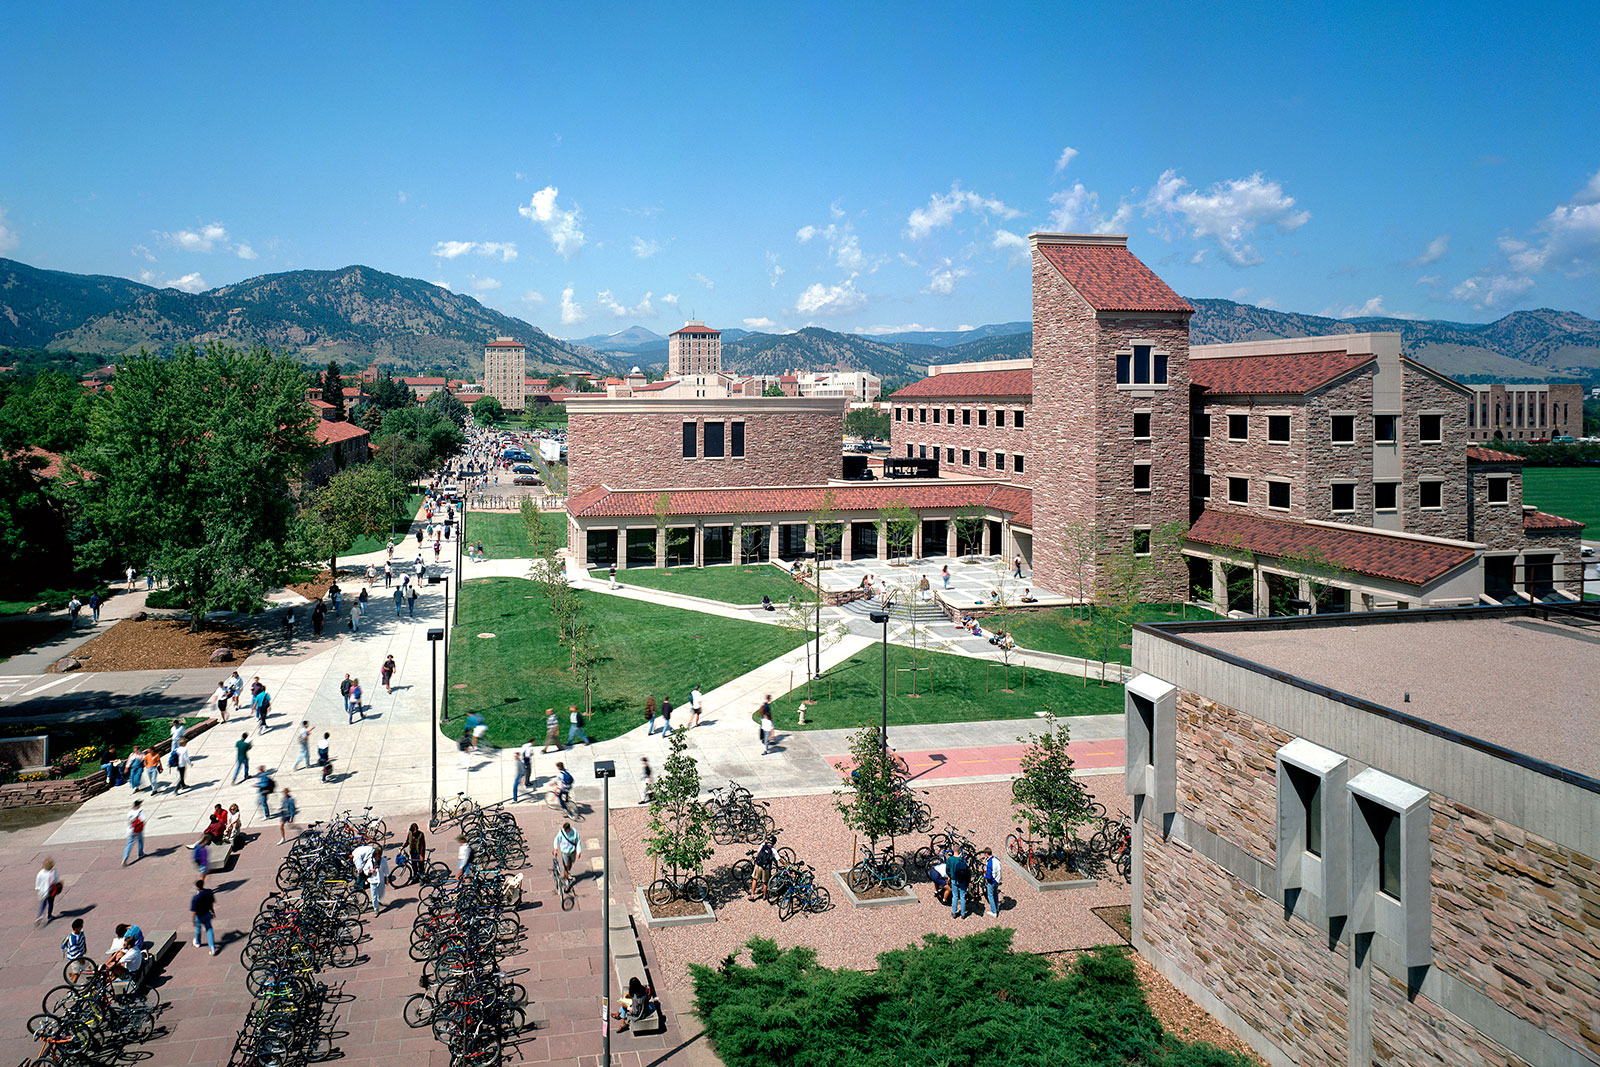 Mathematics Building + Gemmill Library at University of Colorado Boulder